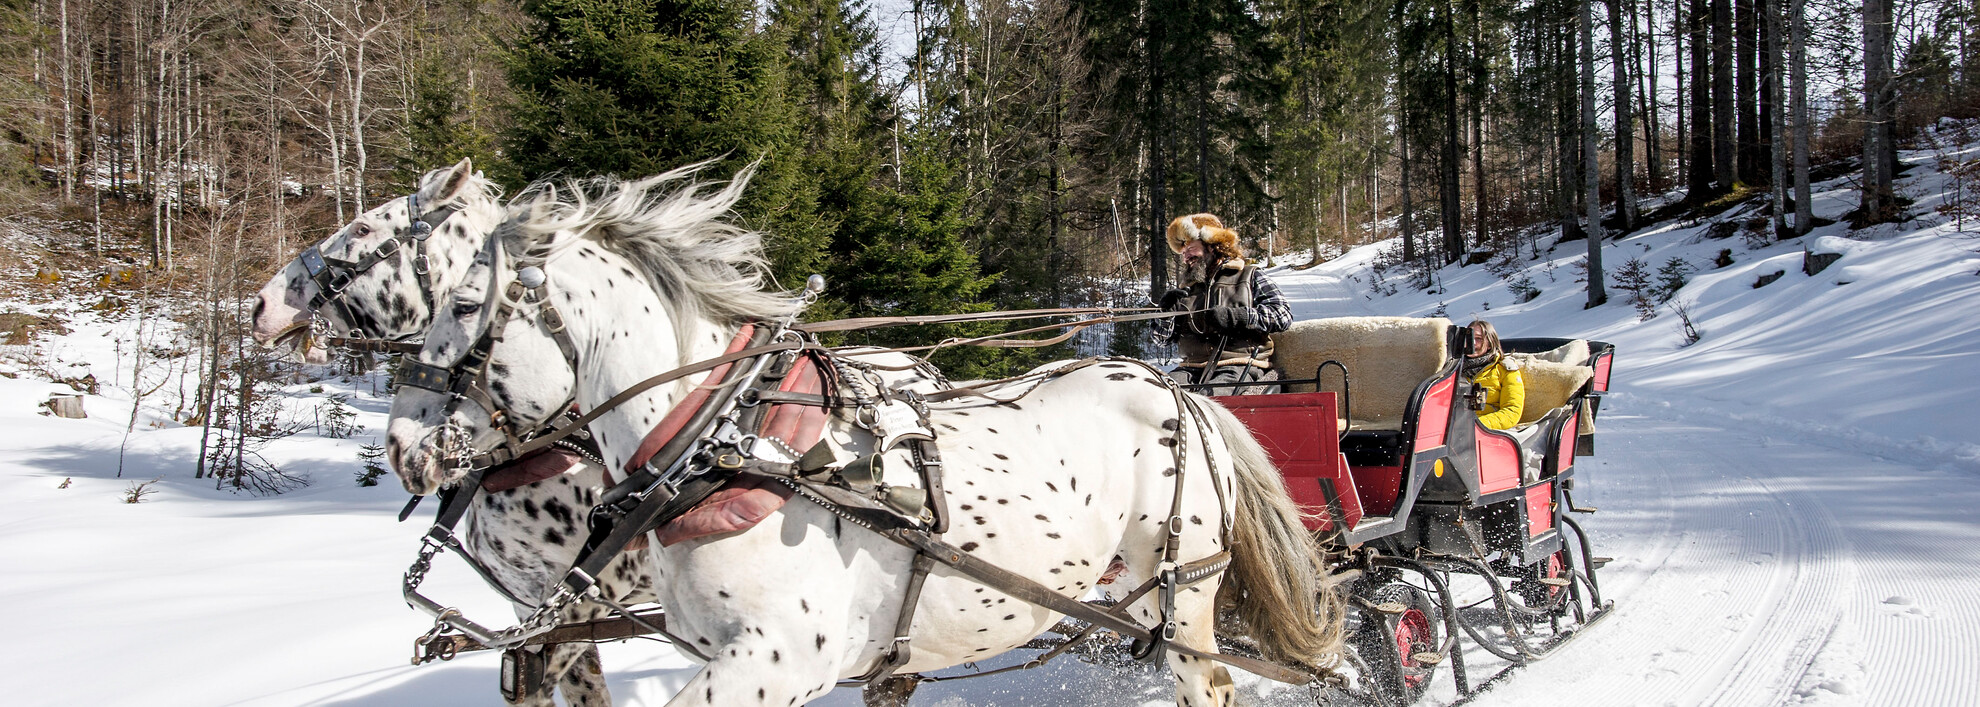  Peter Hammerer on sleigh ride | © Kleinwalsertal Tourismus eGen | Photographer: Dominik Berchtold